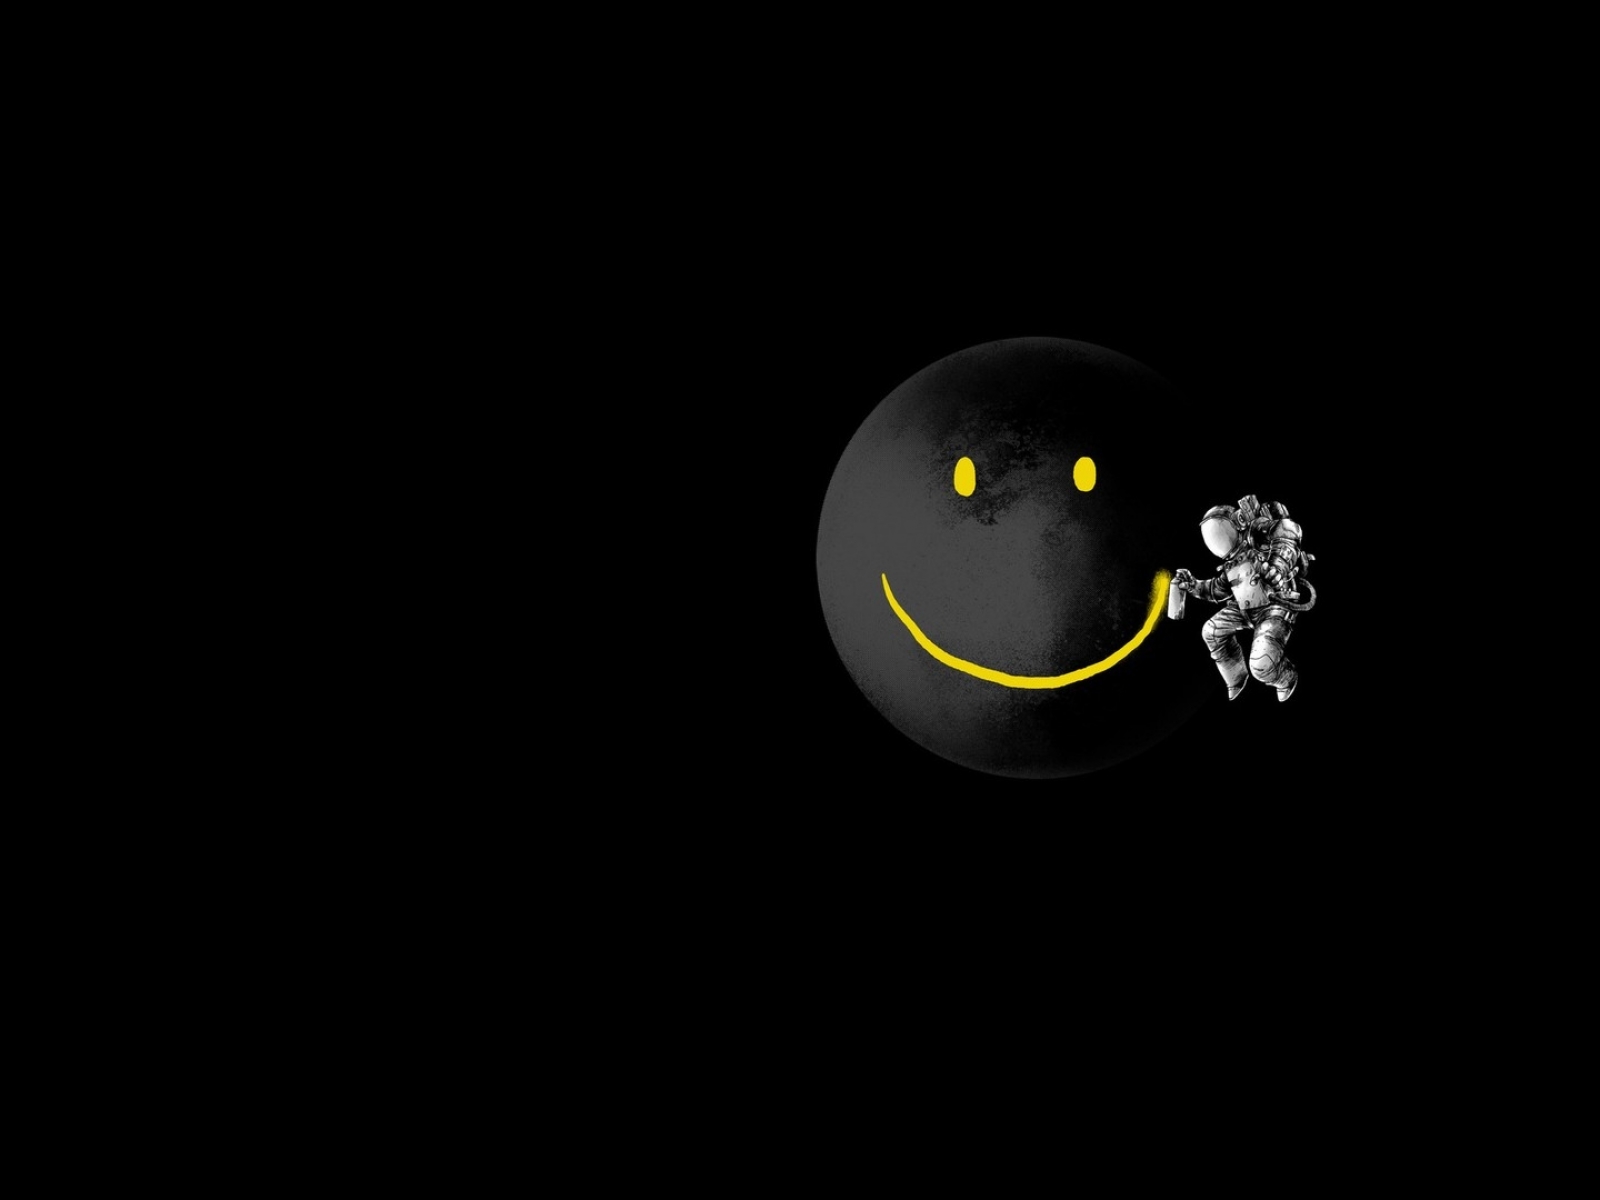  smiley face spaceman black background 1920x1080 wallpaper Wallpaper